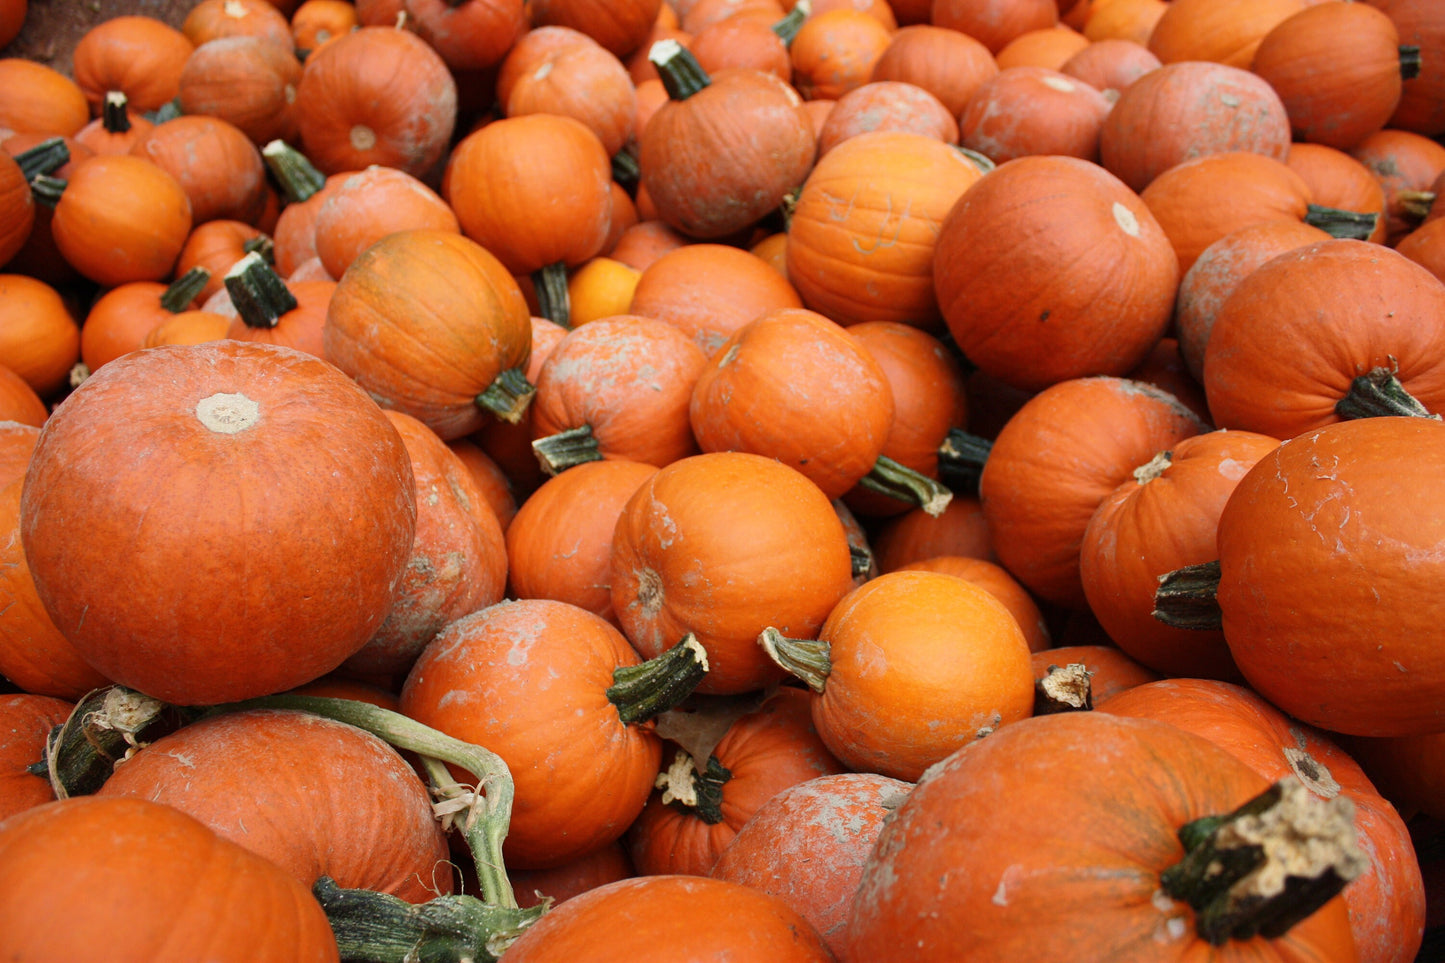 Pumpkin - Vegetable Seeds - Large Orange - Perfect for Carving at Halloween